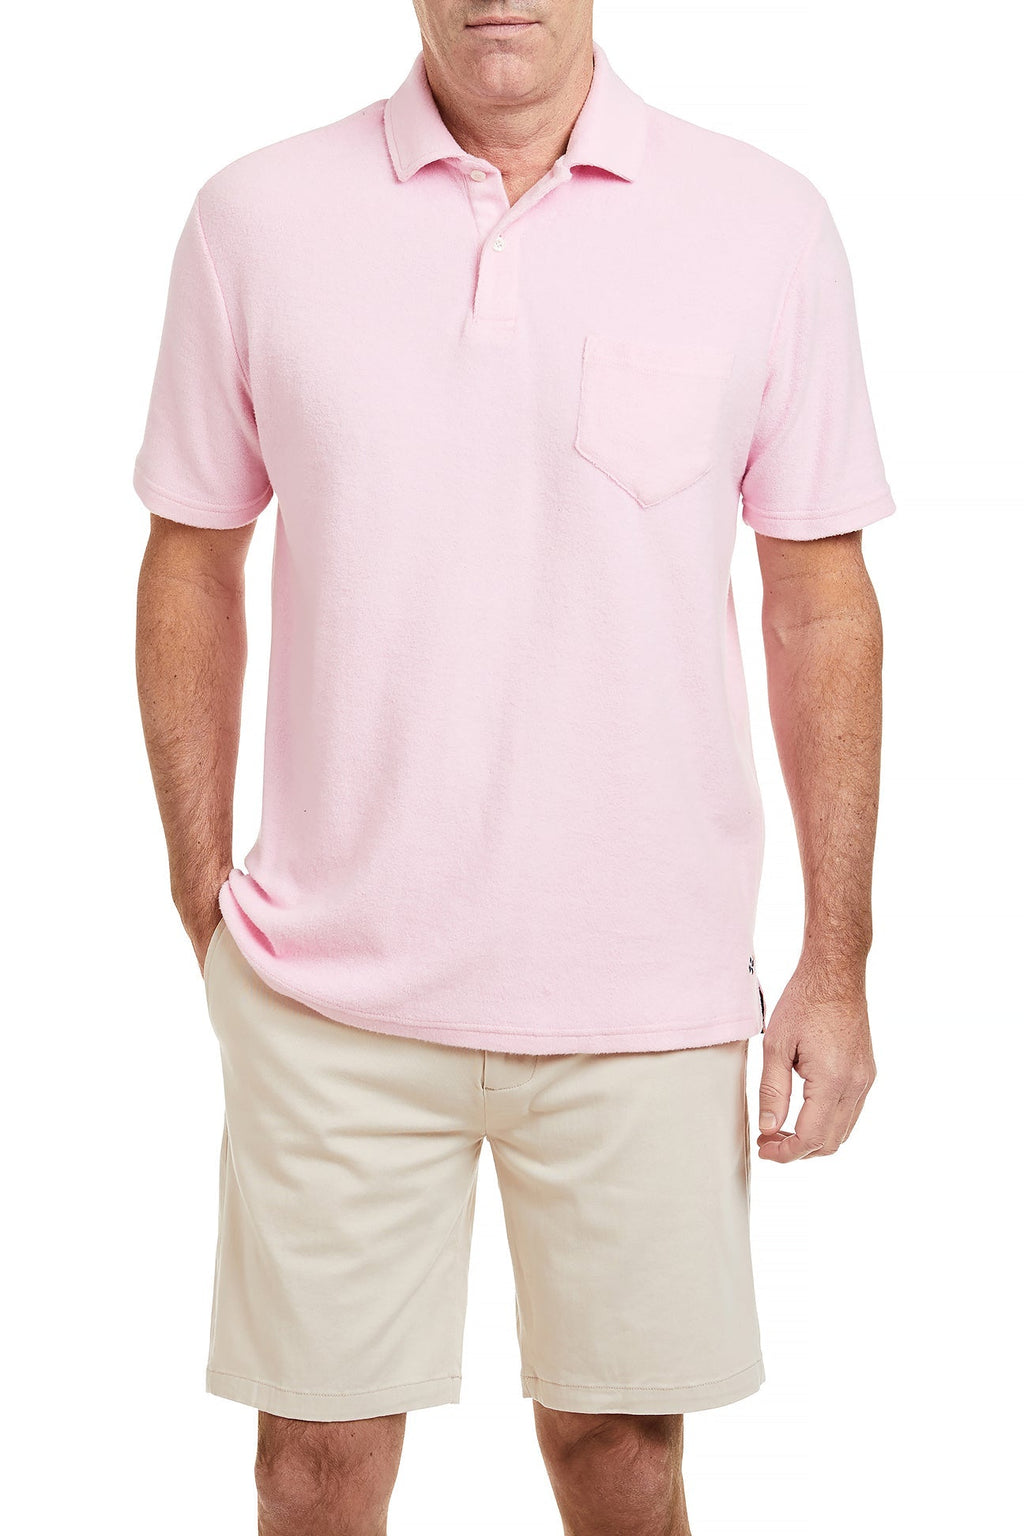 Terry Cloth Polo Shirt Pink POLOS & TEES Castaway Nantucket Island